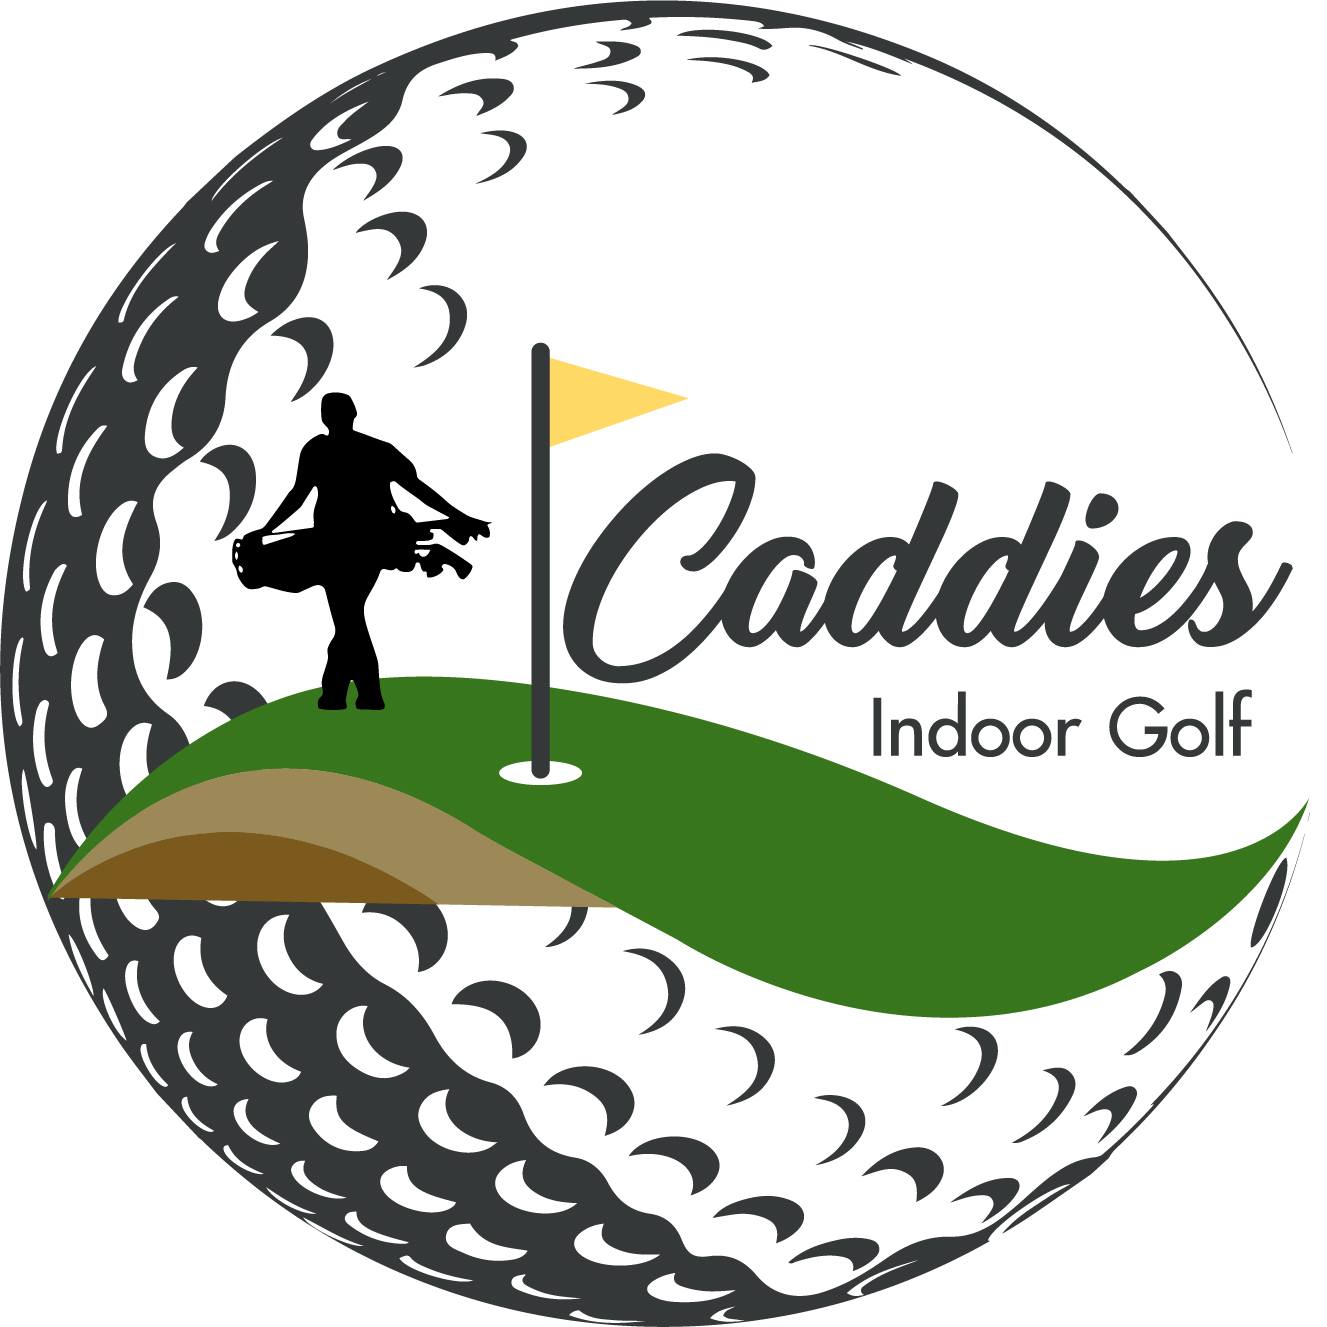 Caddies Indoor Golf